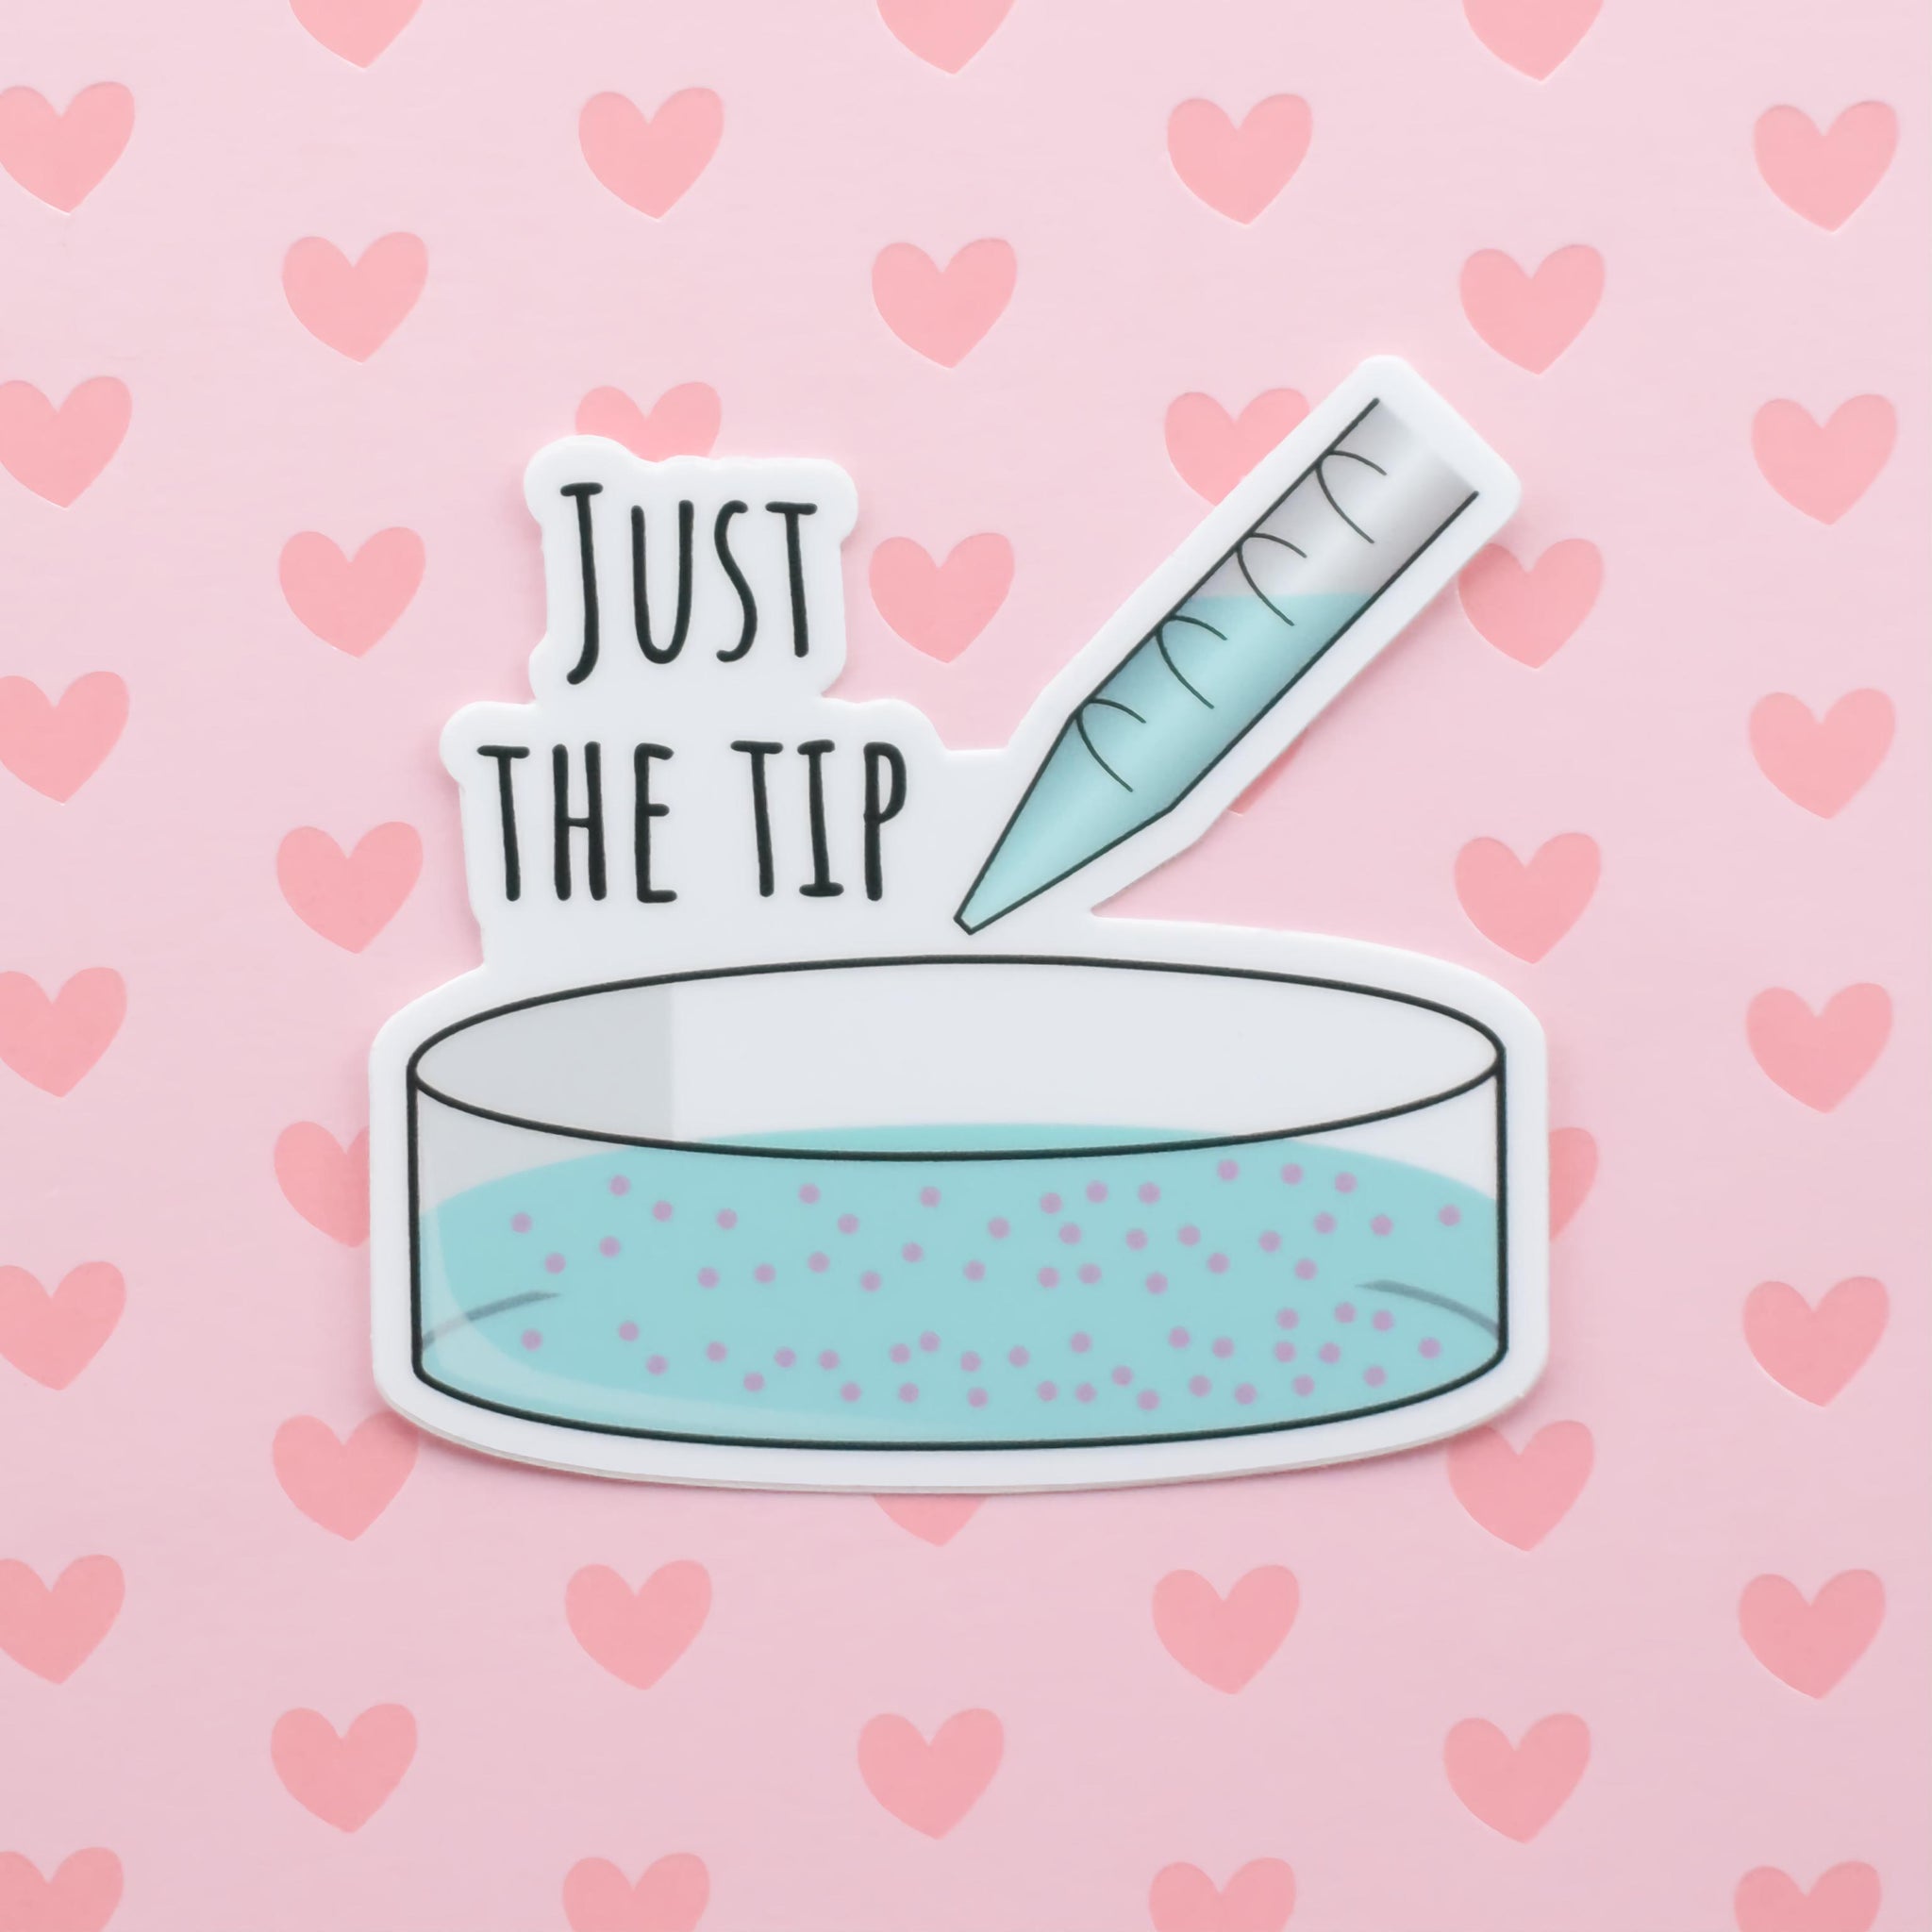 Just The Tip petri dish | vinyl science sticker (biology)